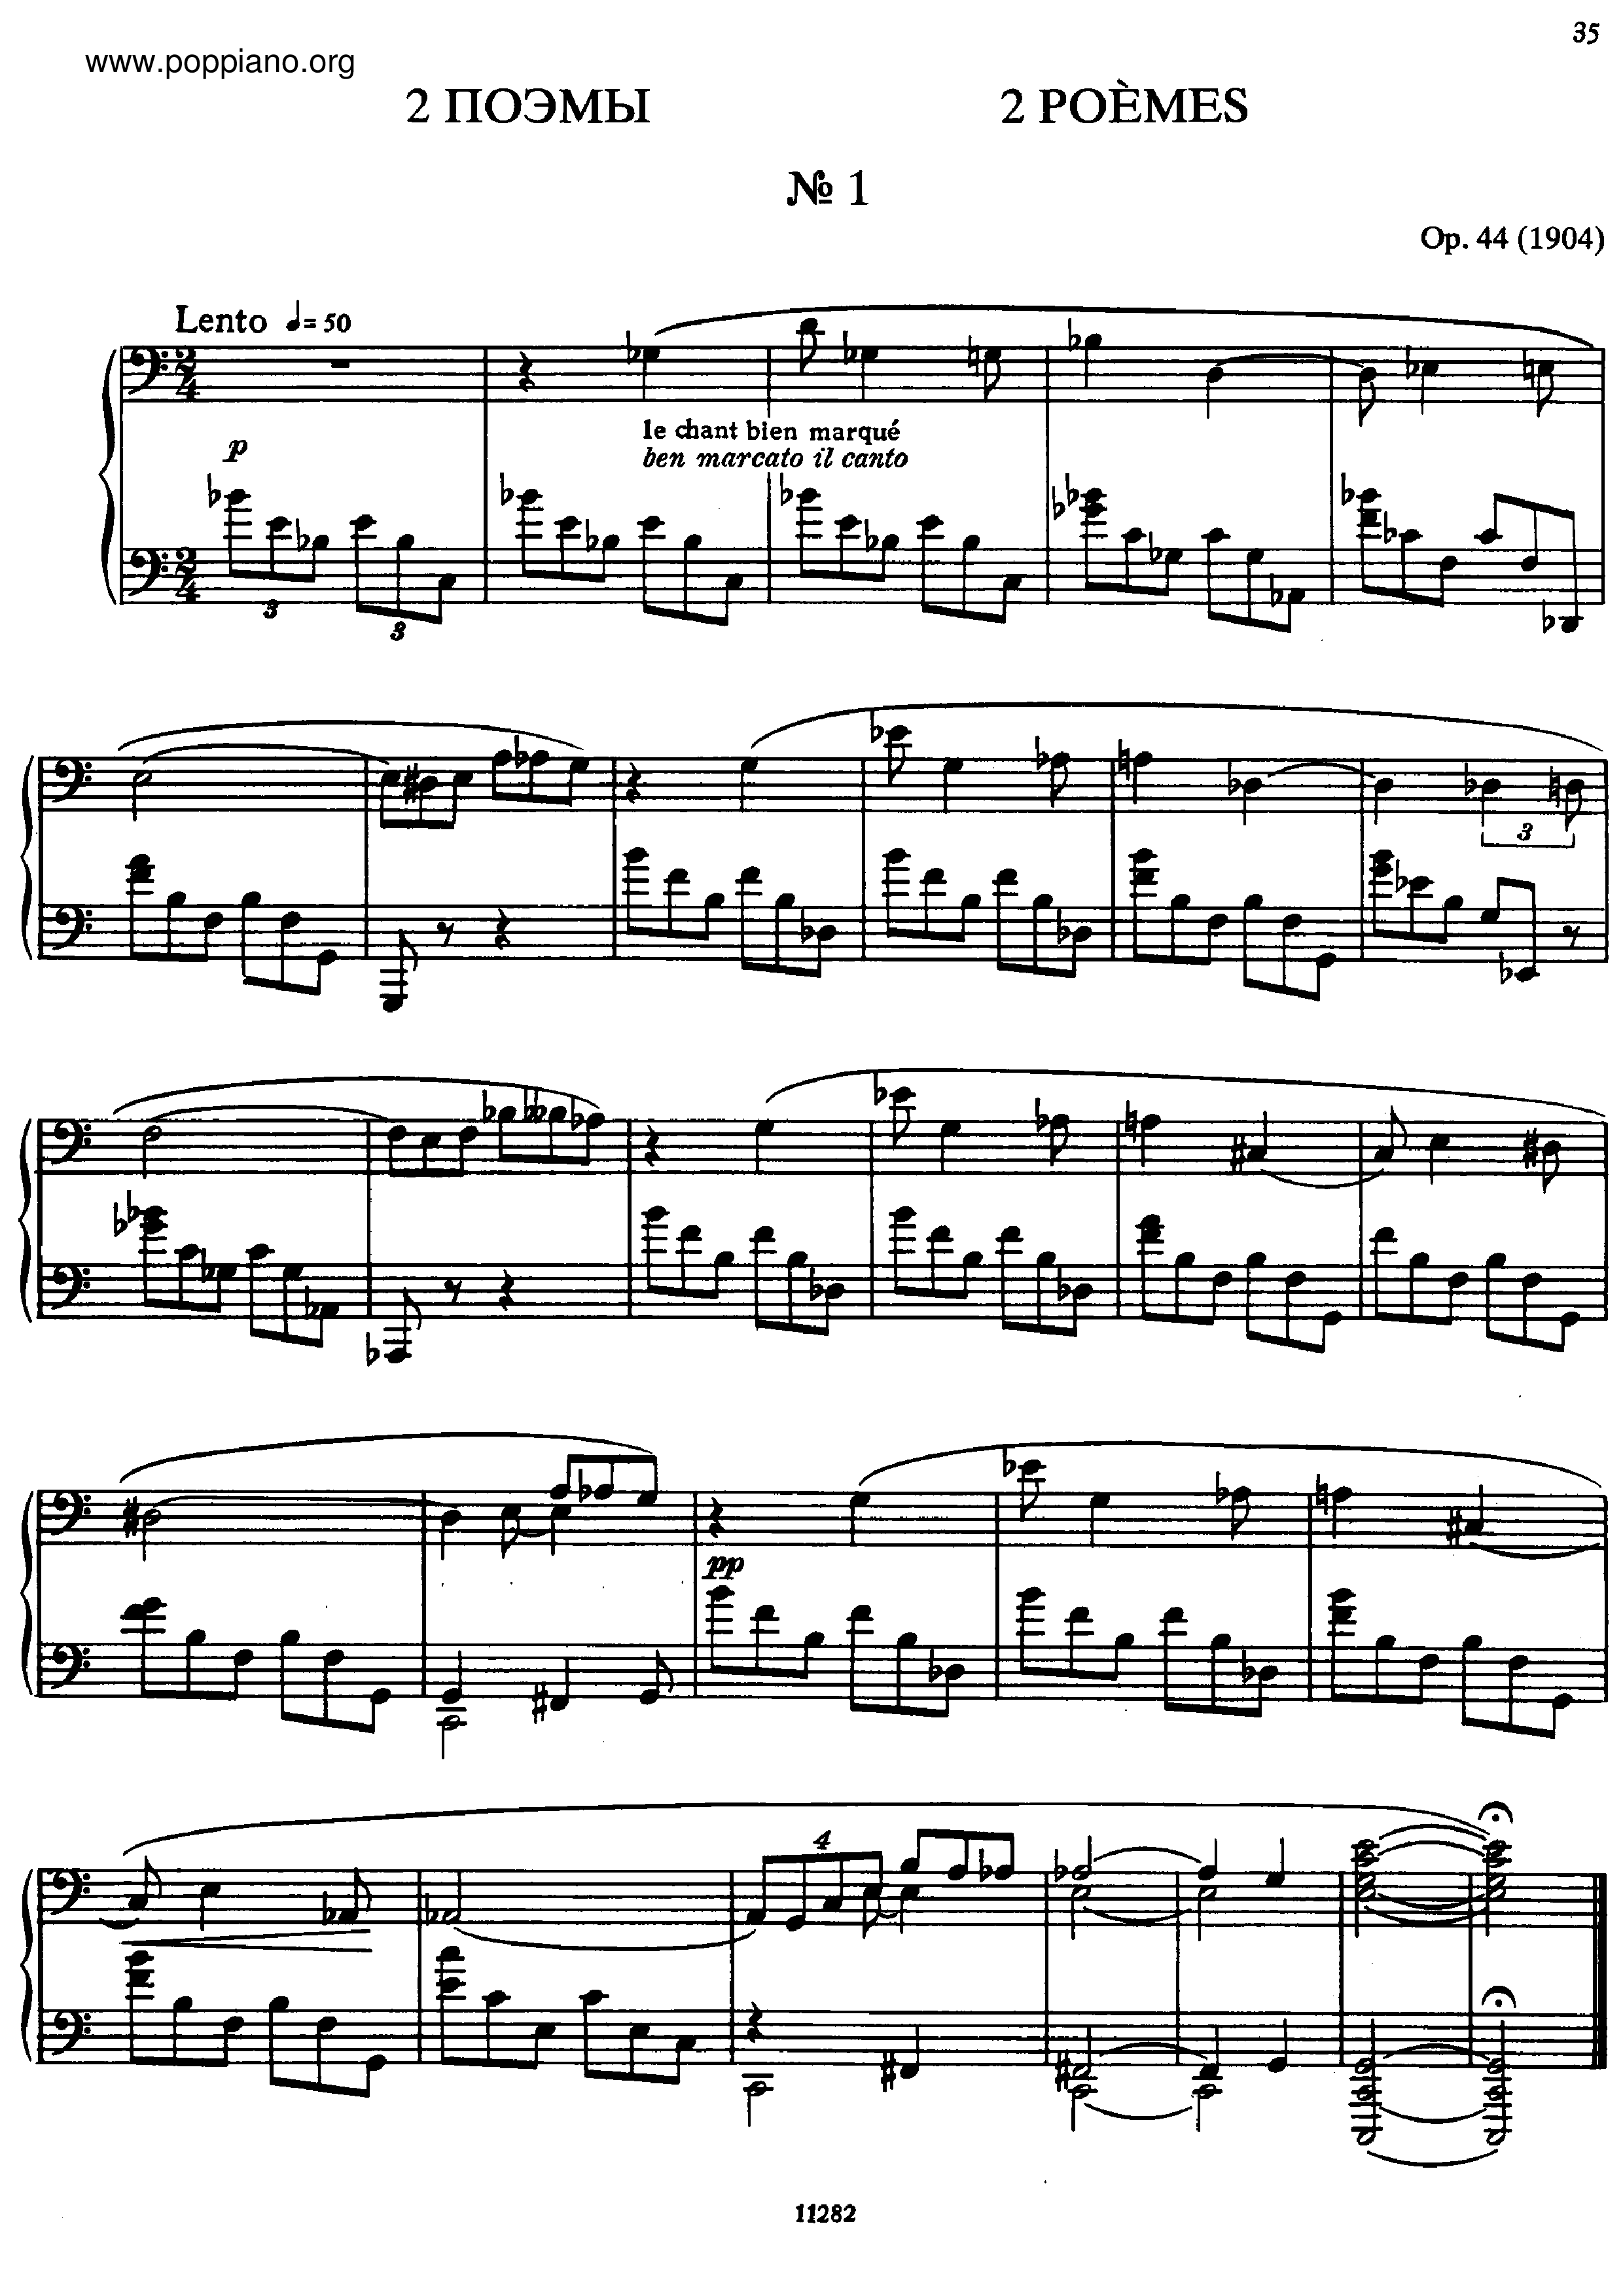 2 Poemes, Op.44ピアノ譜